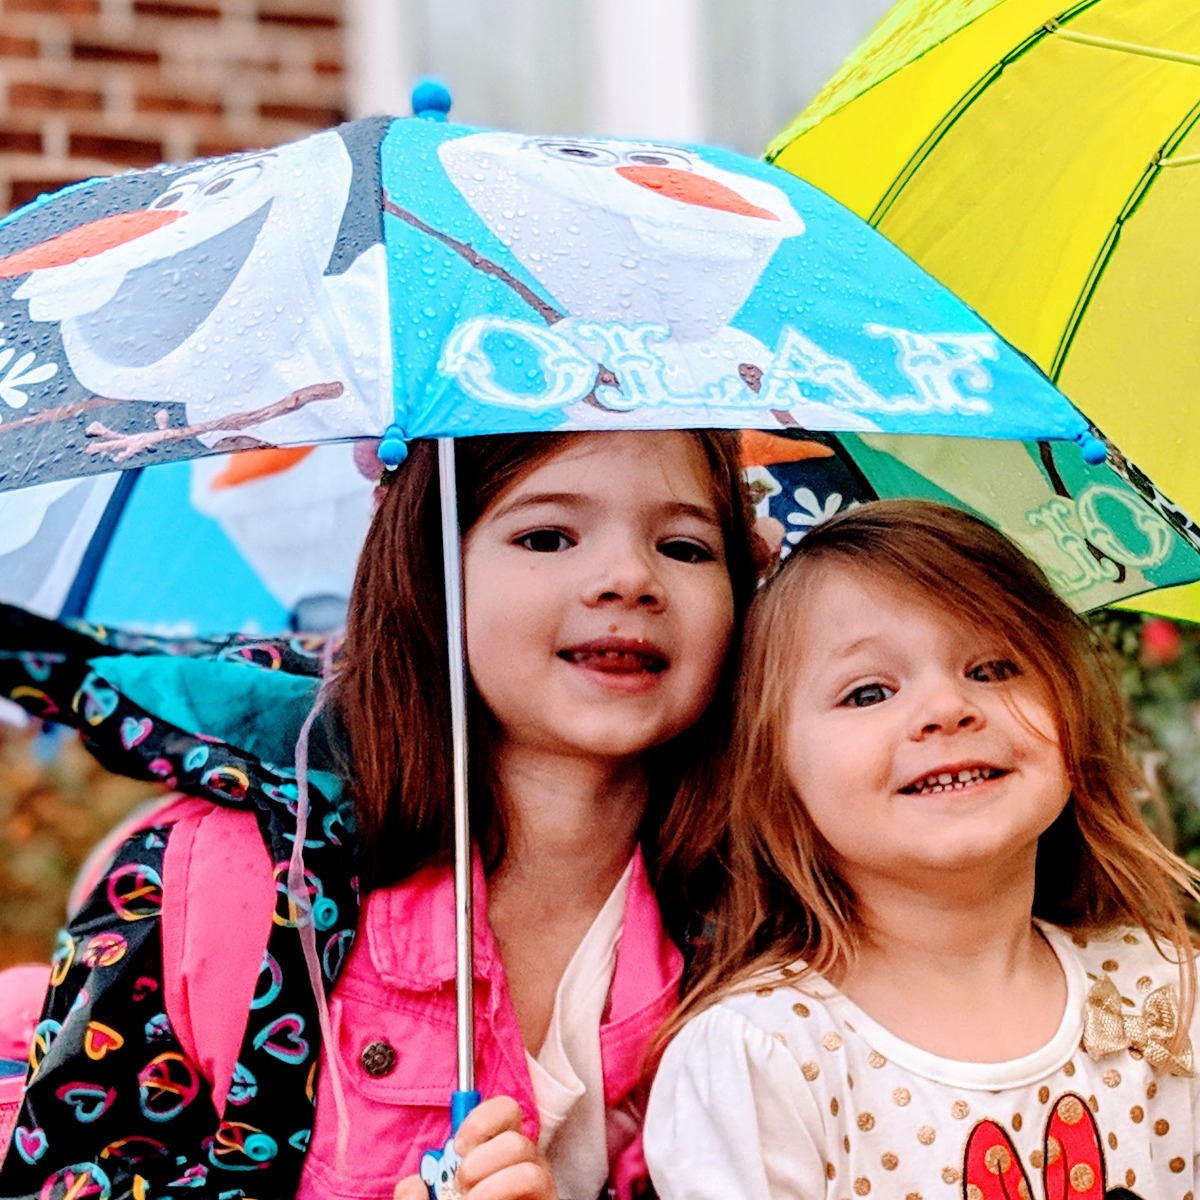 Elementary School kids ready for rainy day garden club activities